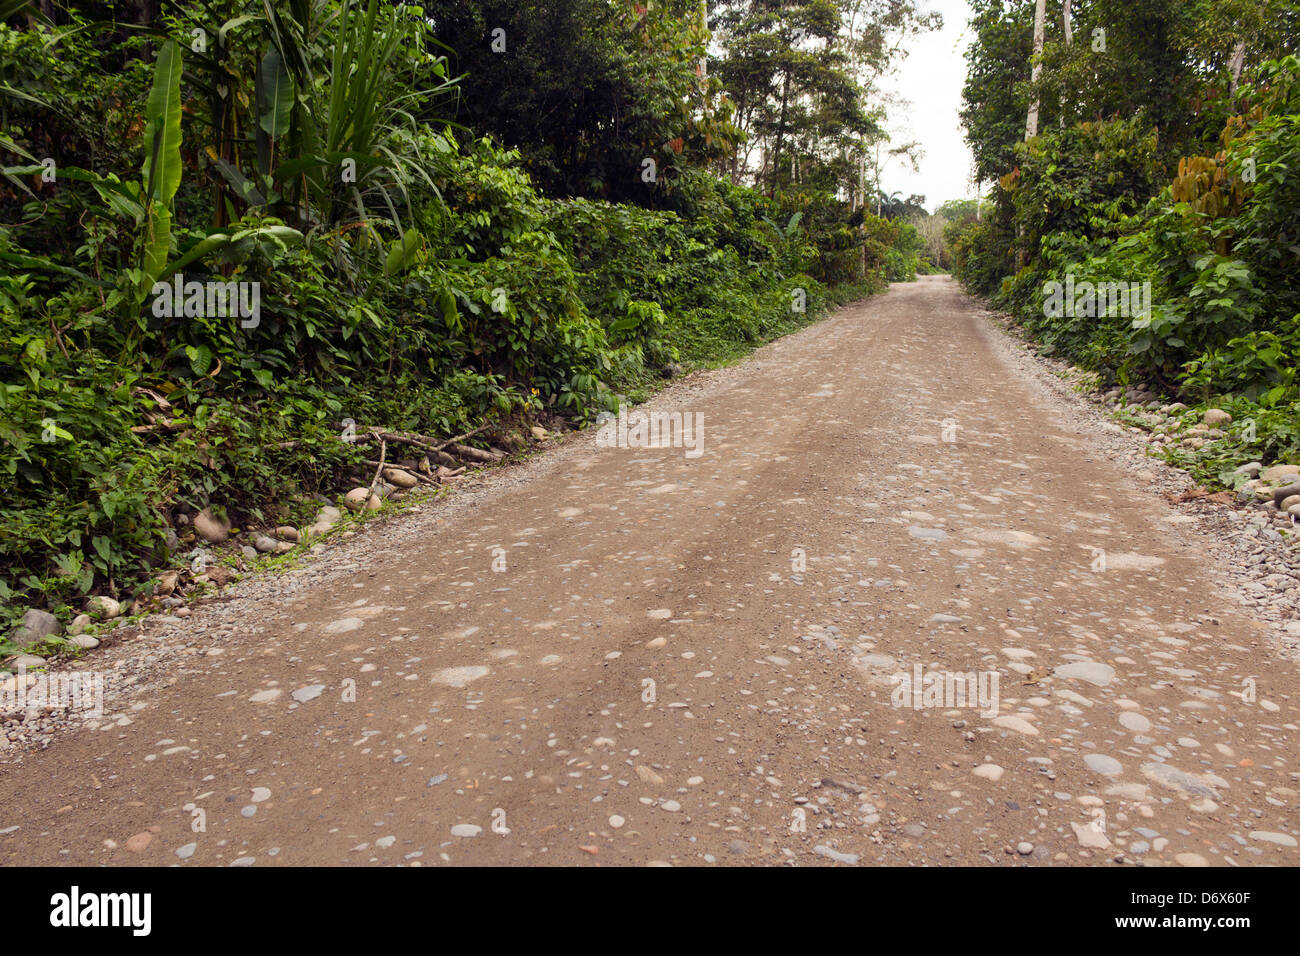 Dirt road running through primary tropical rainforest in Ecuador Stock Photo